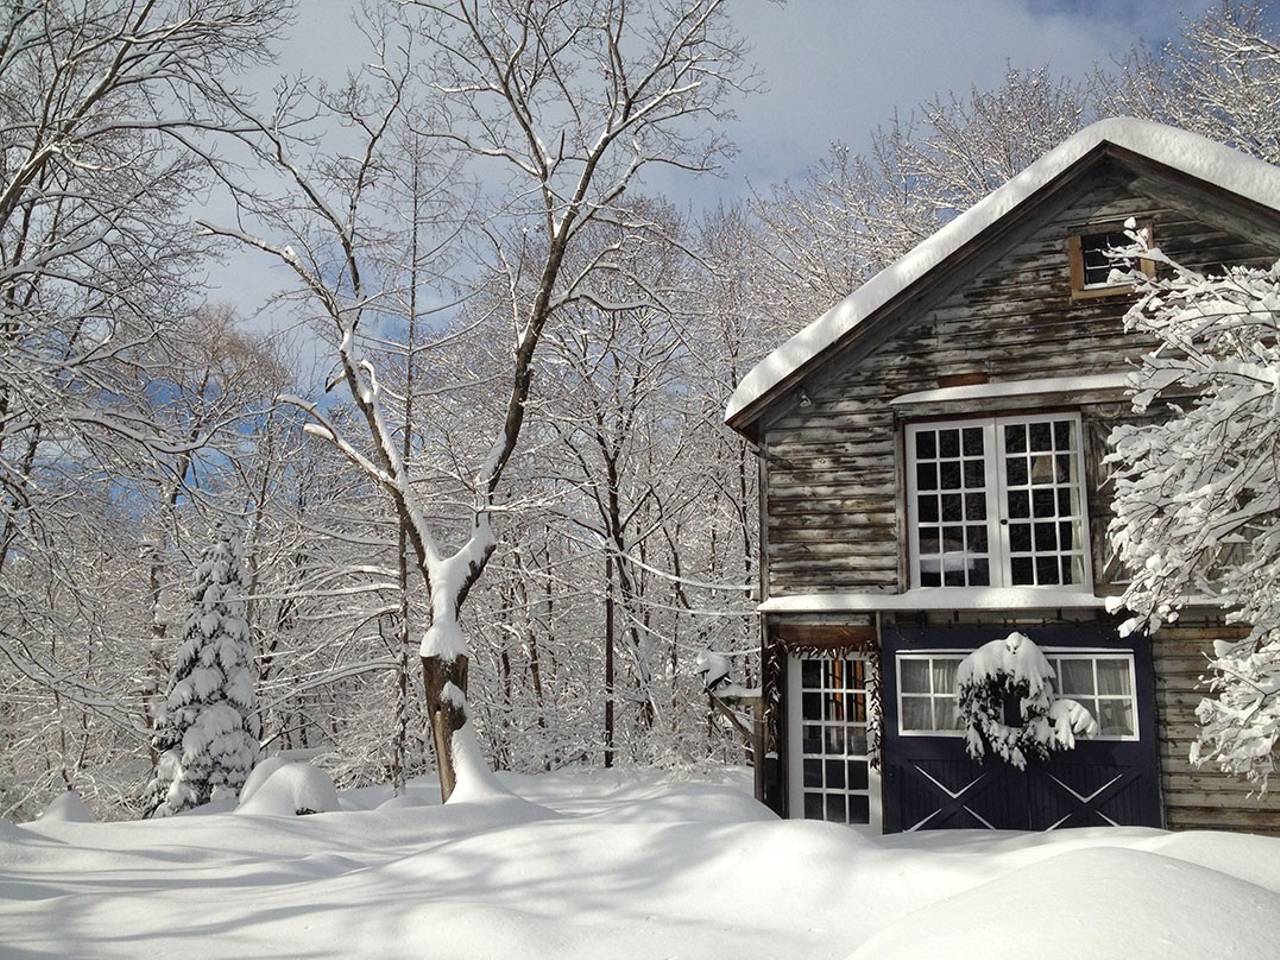 Dreamy Winter Getaways on Airbnb - The Barn in Tivoli